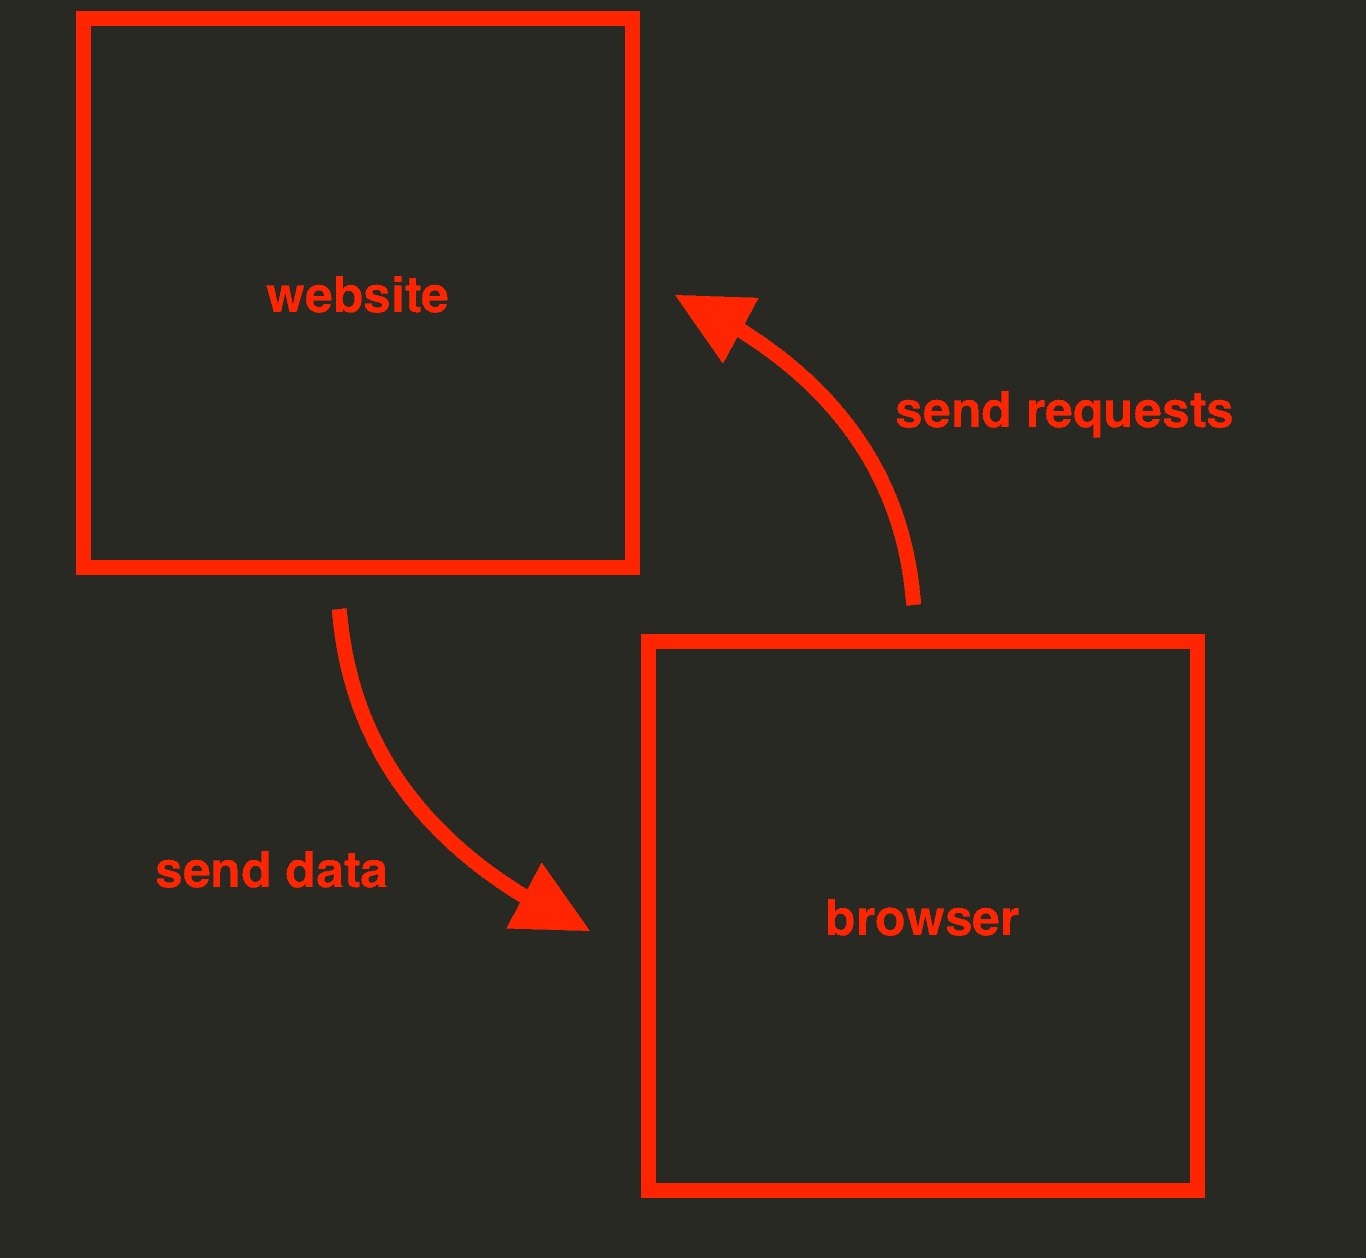 schema of requests exchanged between browser and website - image7.png